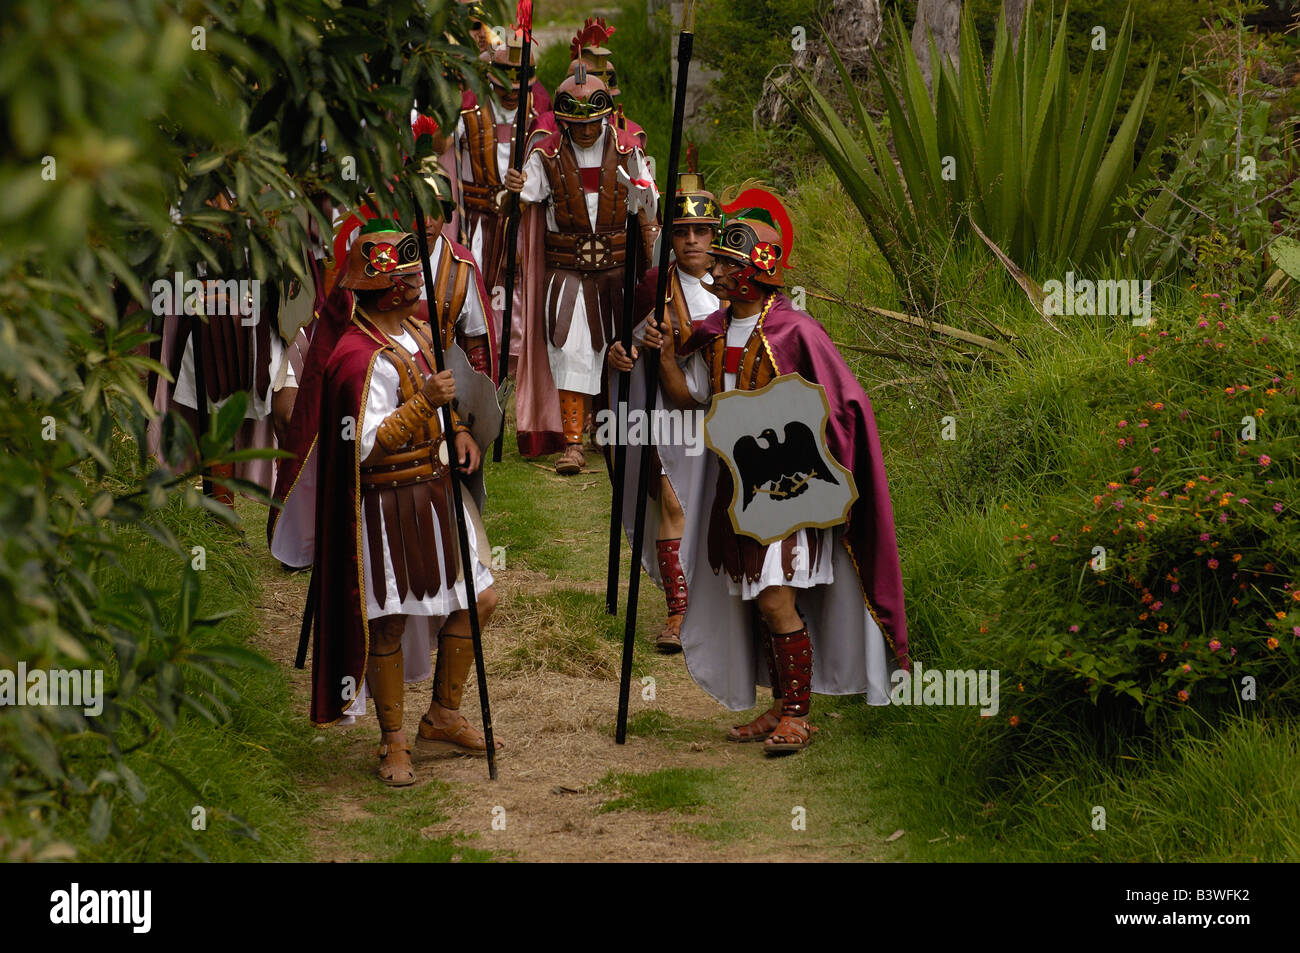 Guardias romanos fotografías e imágenes de alta resolución - Alamy